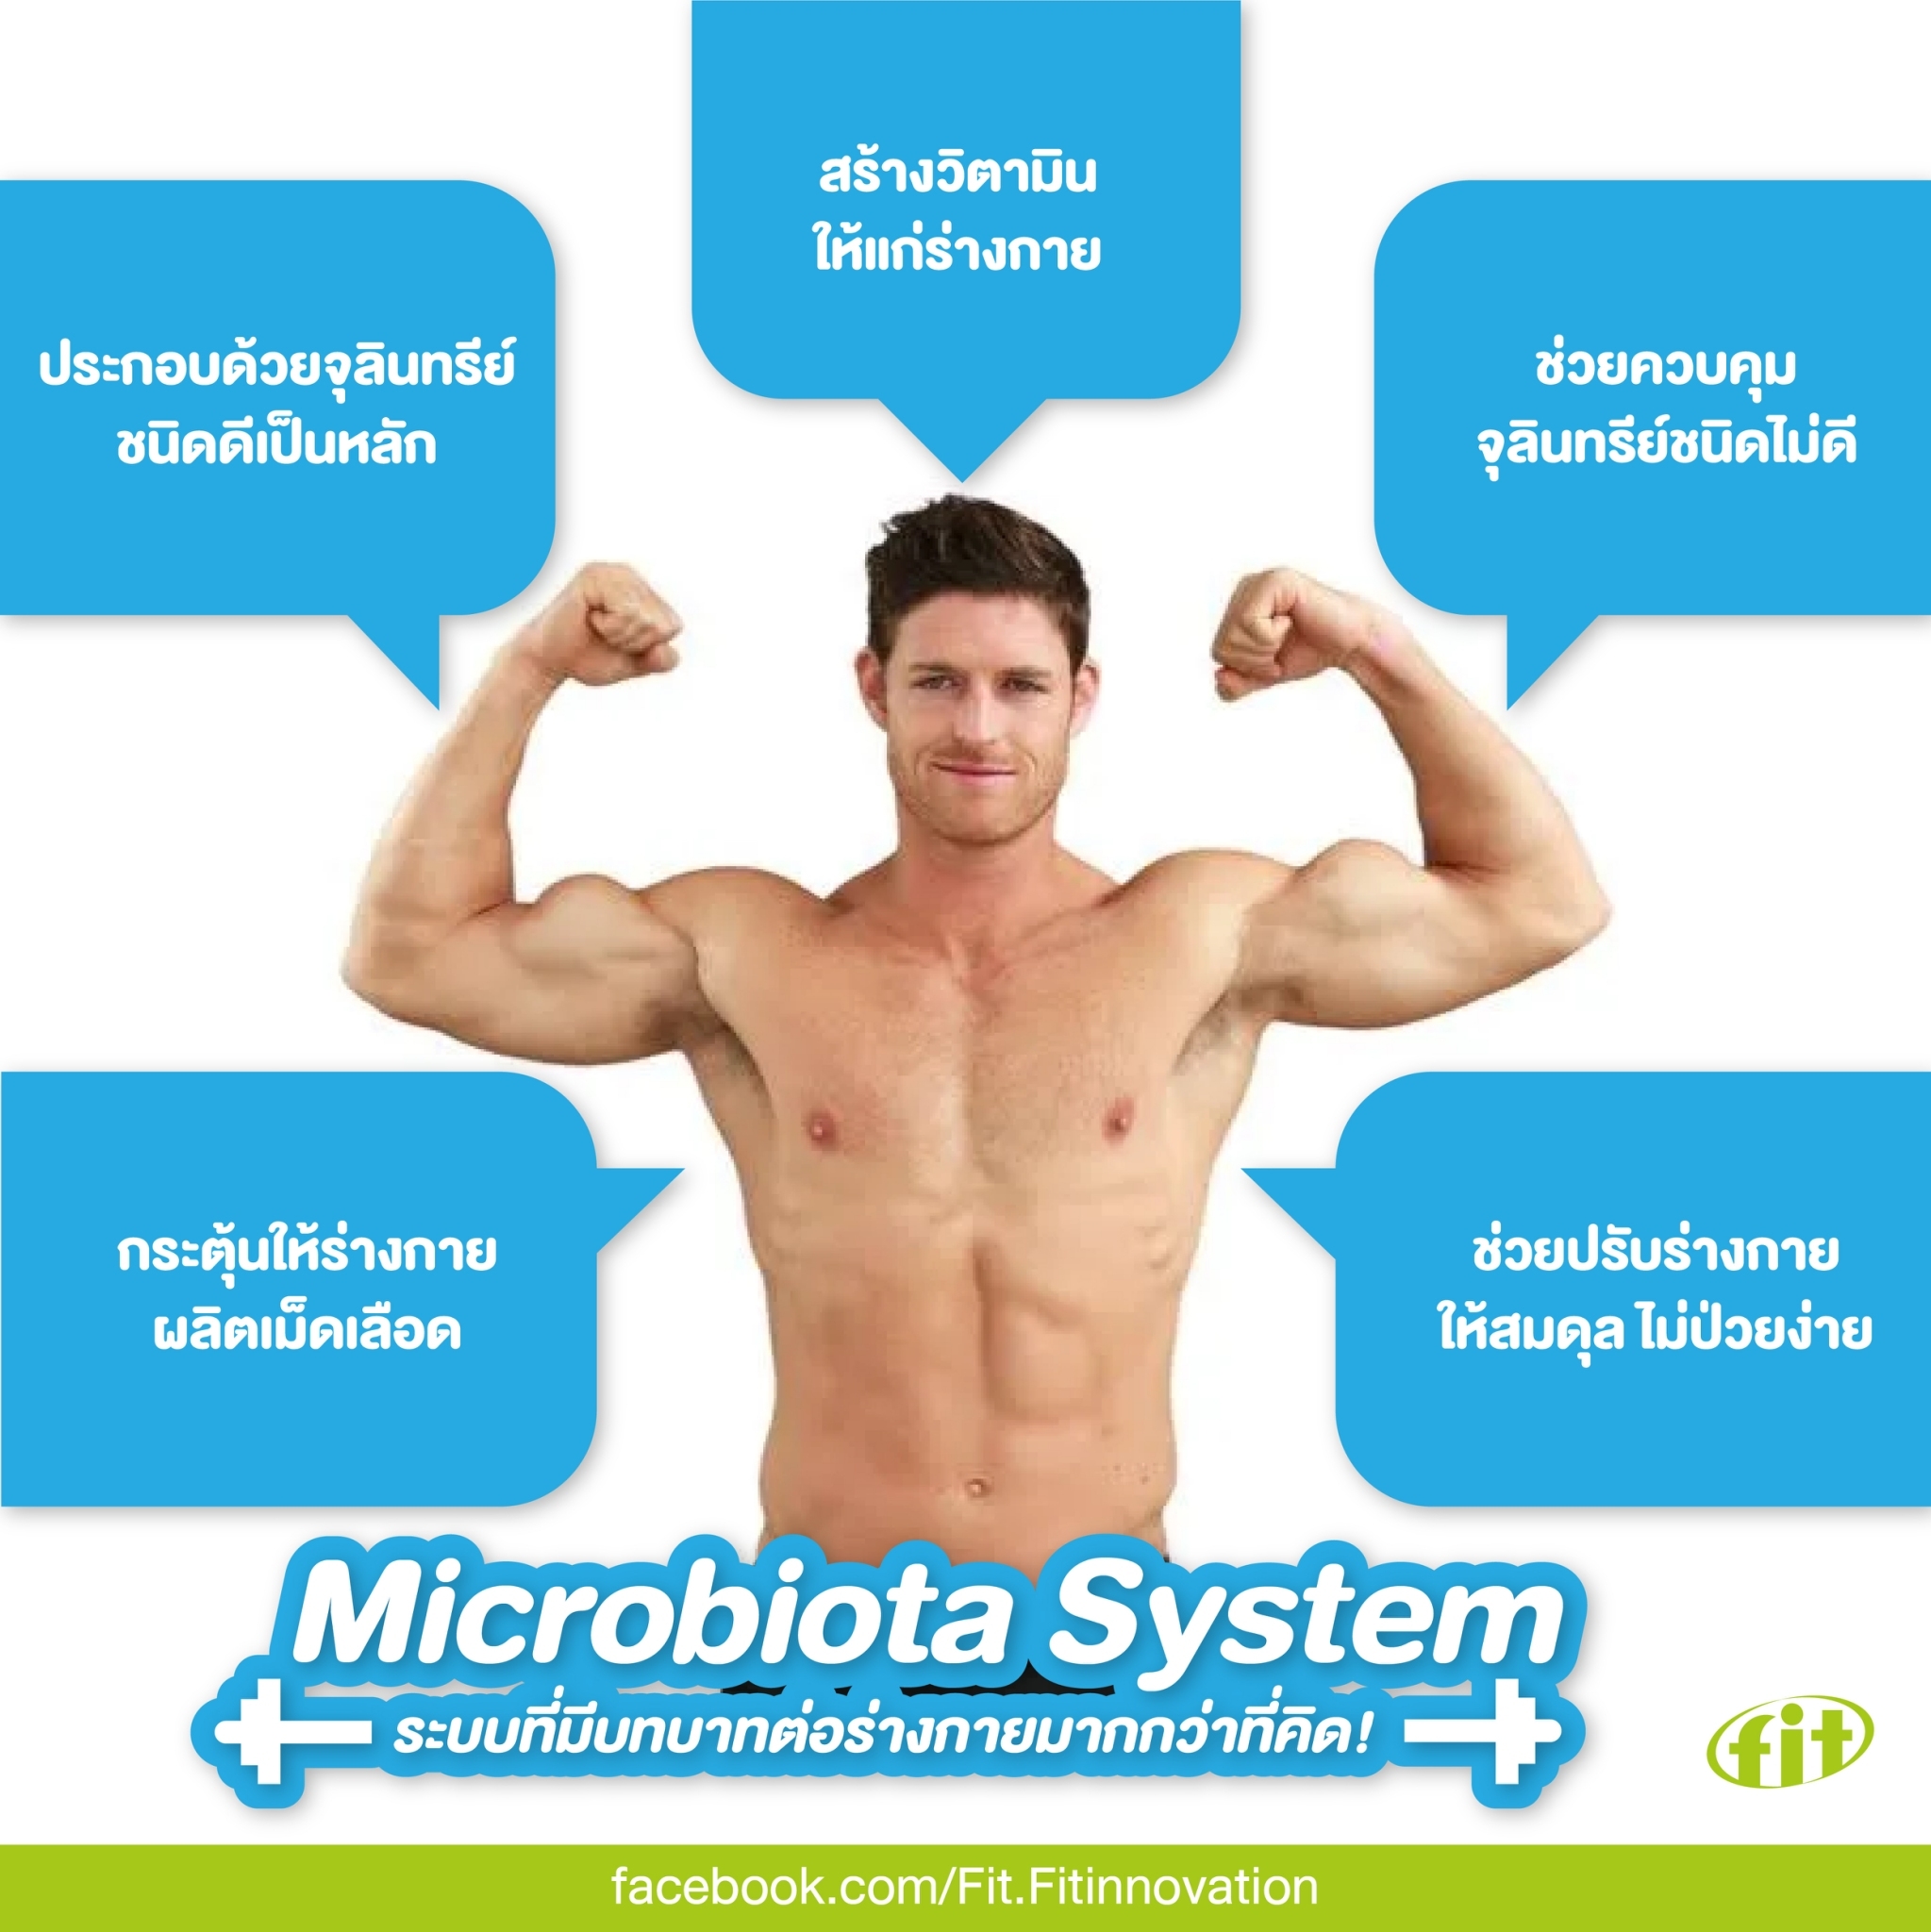 Microbiota System ระบบที่มีบทบาทต่อร่างกายมากกว่าที่คิด